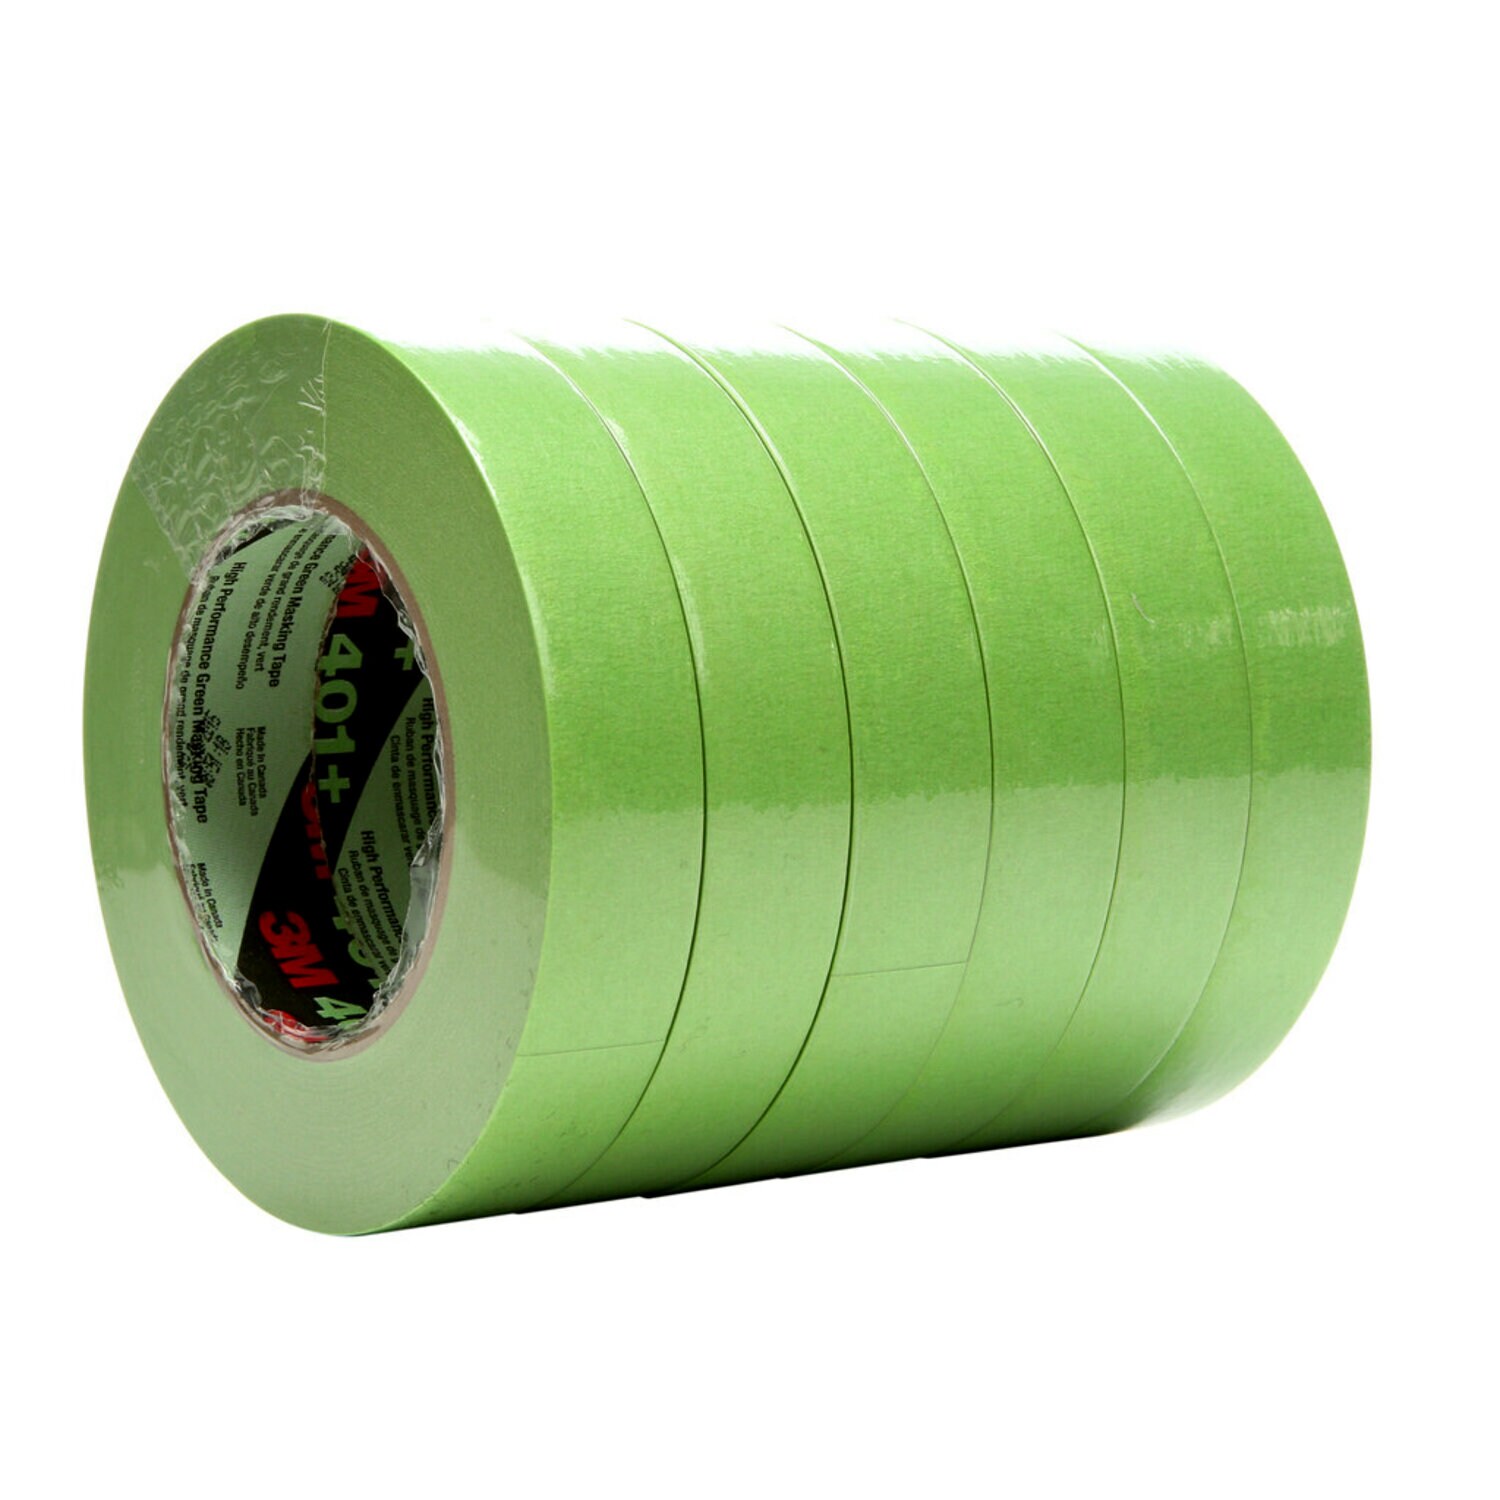 Lab Tape - 1/2 x 40yd - 3in. Core - Green (6PK)